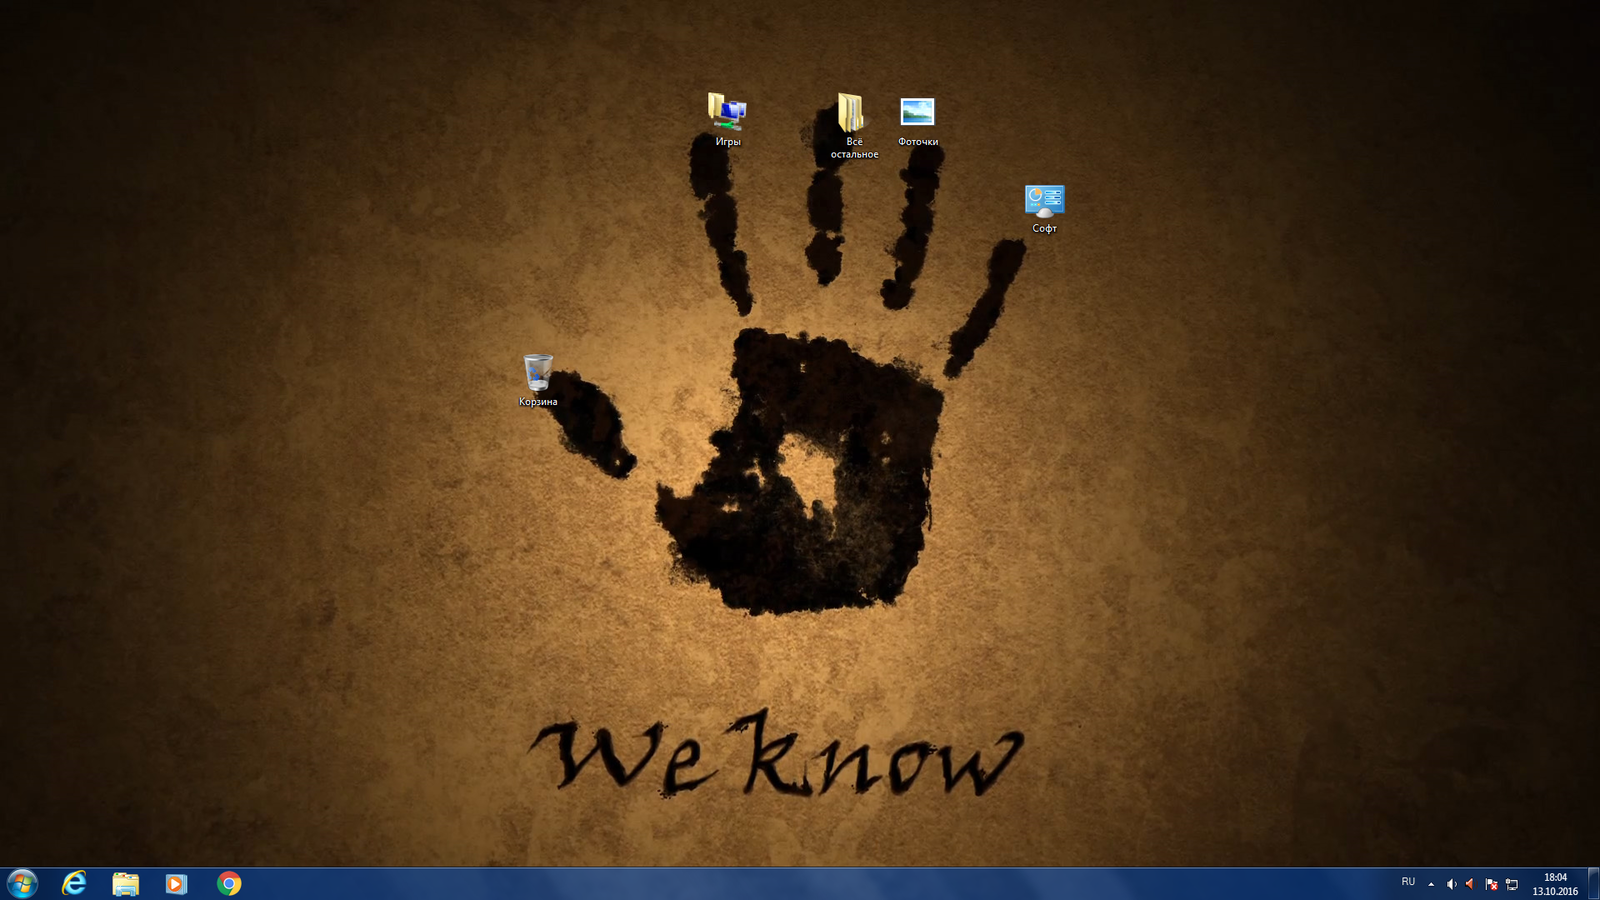 When I cleaned my desktop - My, Desktop, The Dark Brotherhood, The elder scrolls, We know